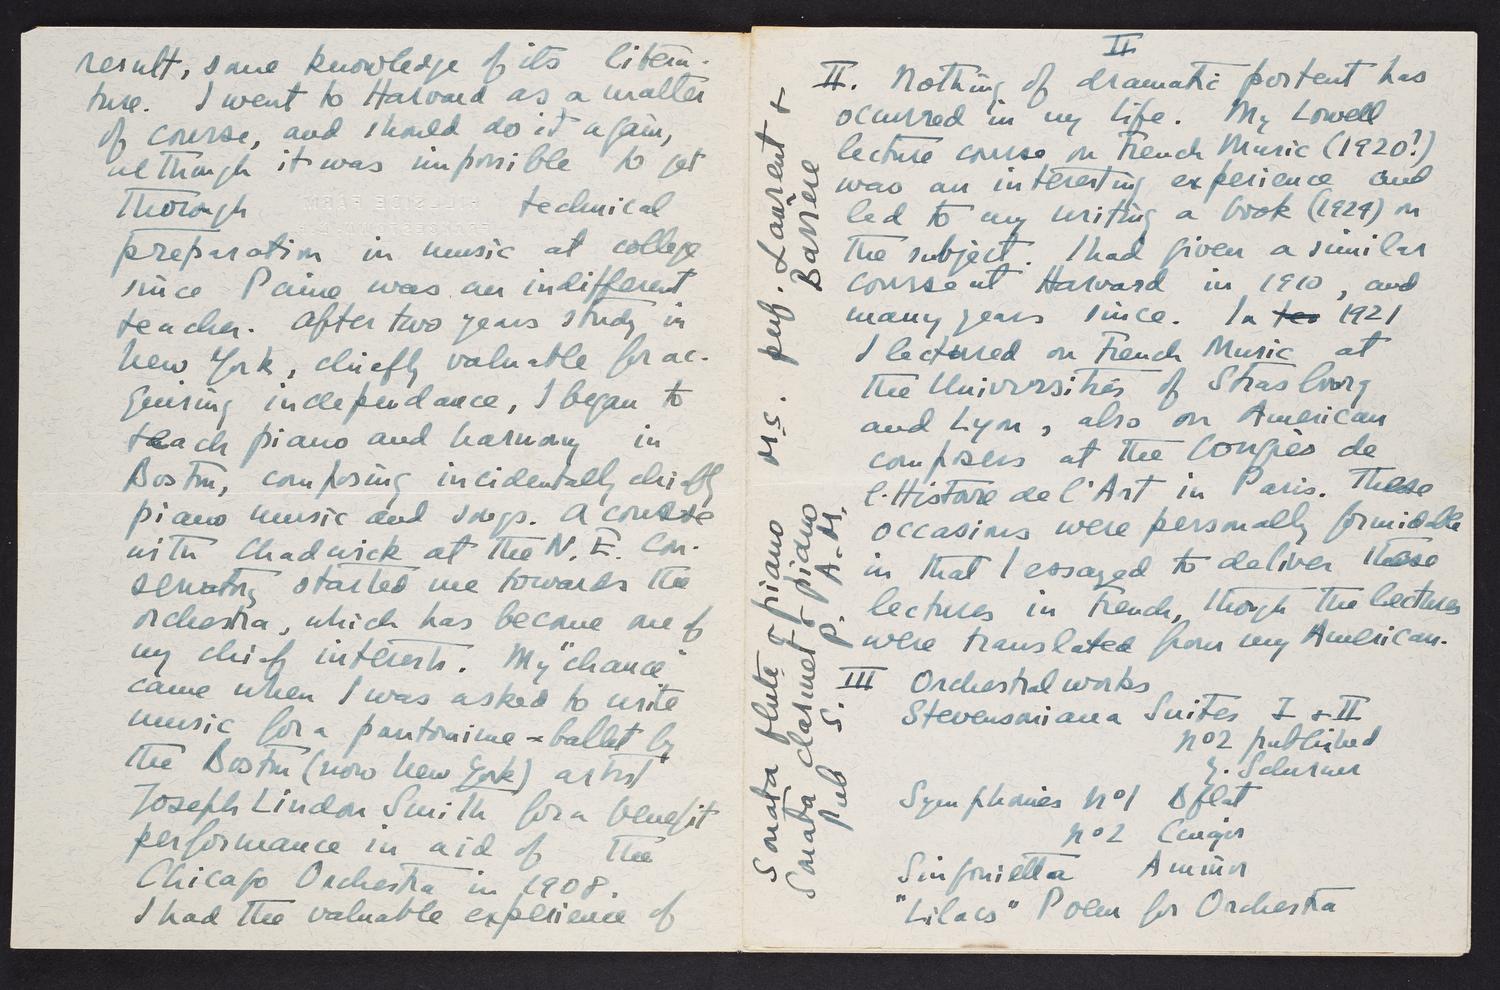 Correspondence from Edward Burlingame to David Ewen, page 2-3 of 11